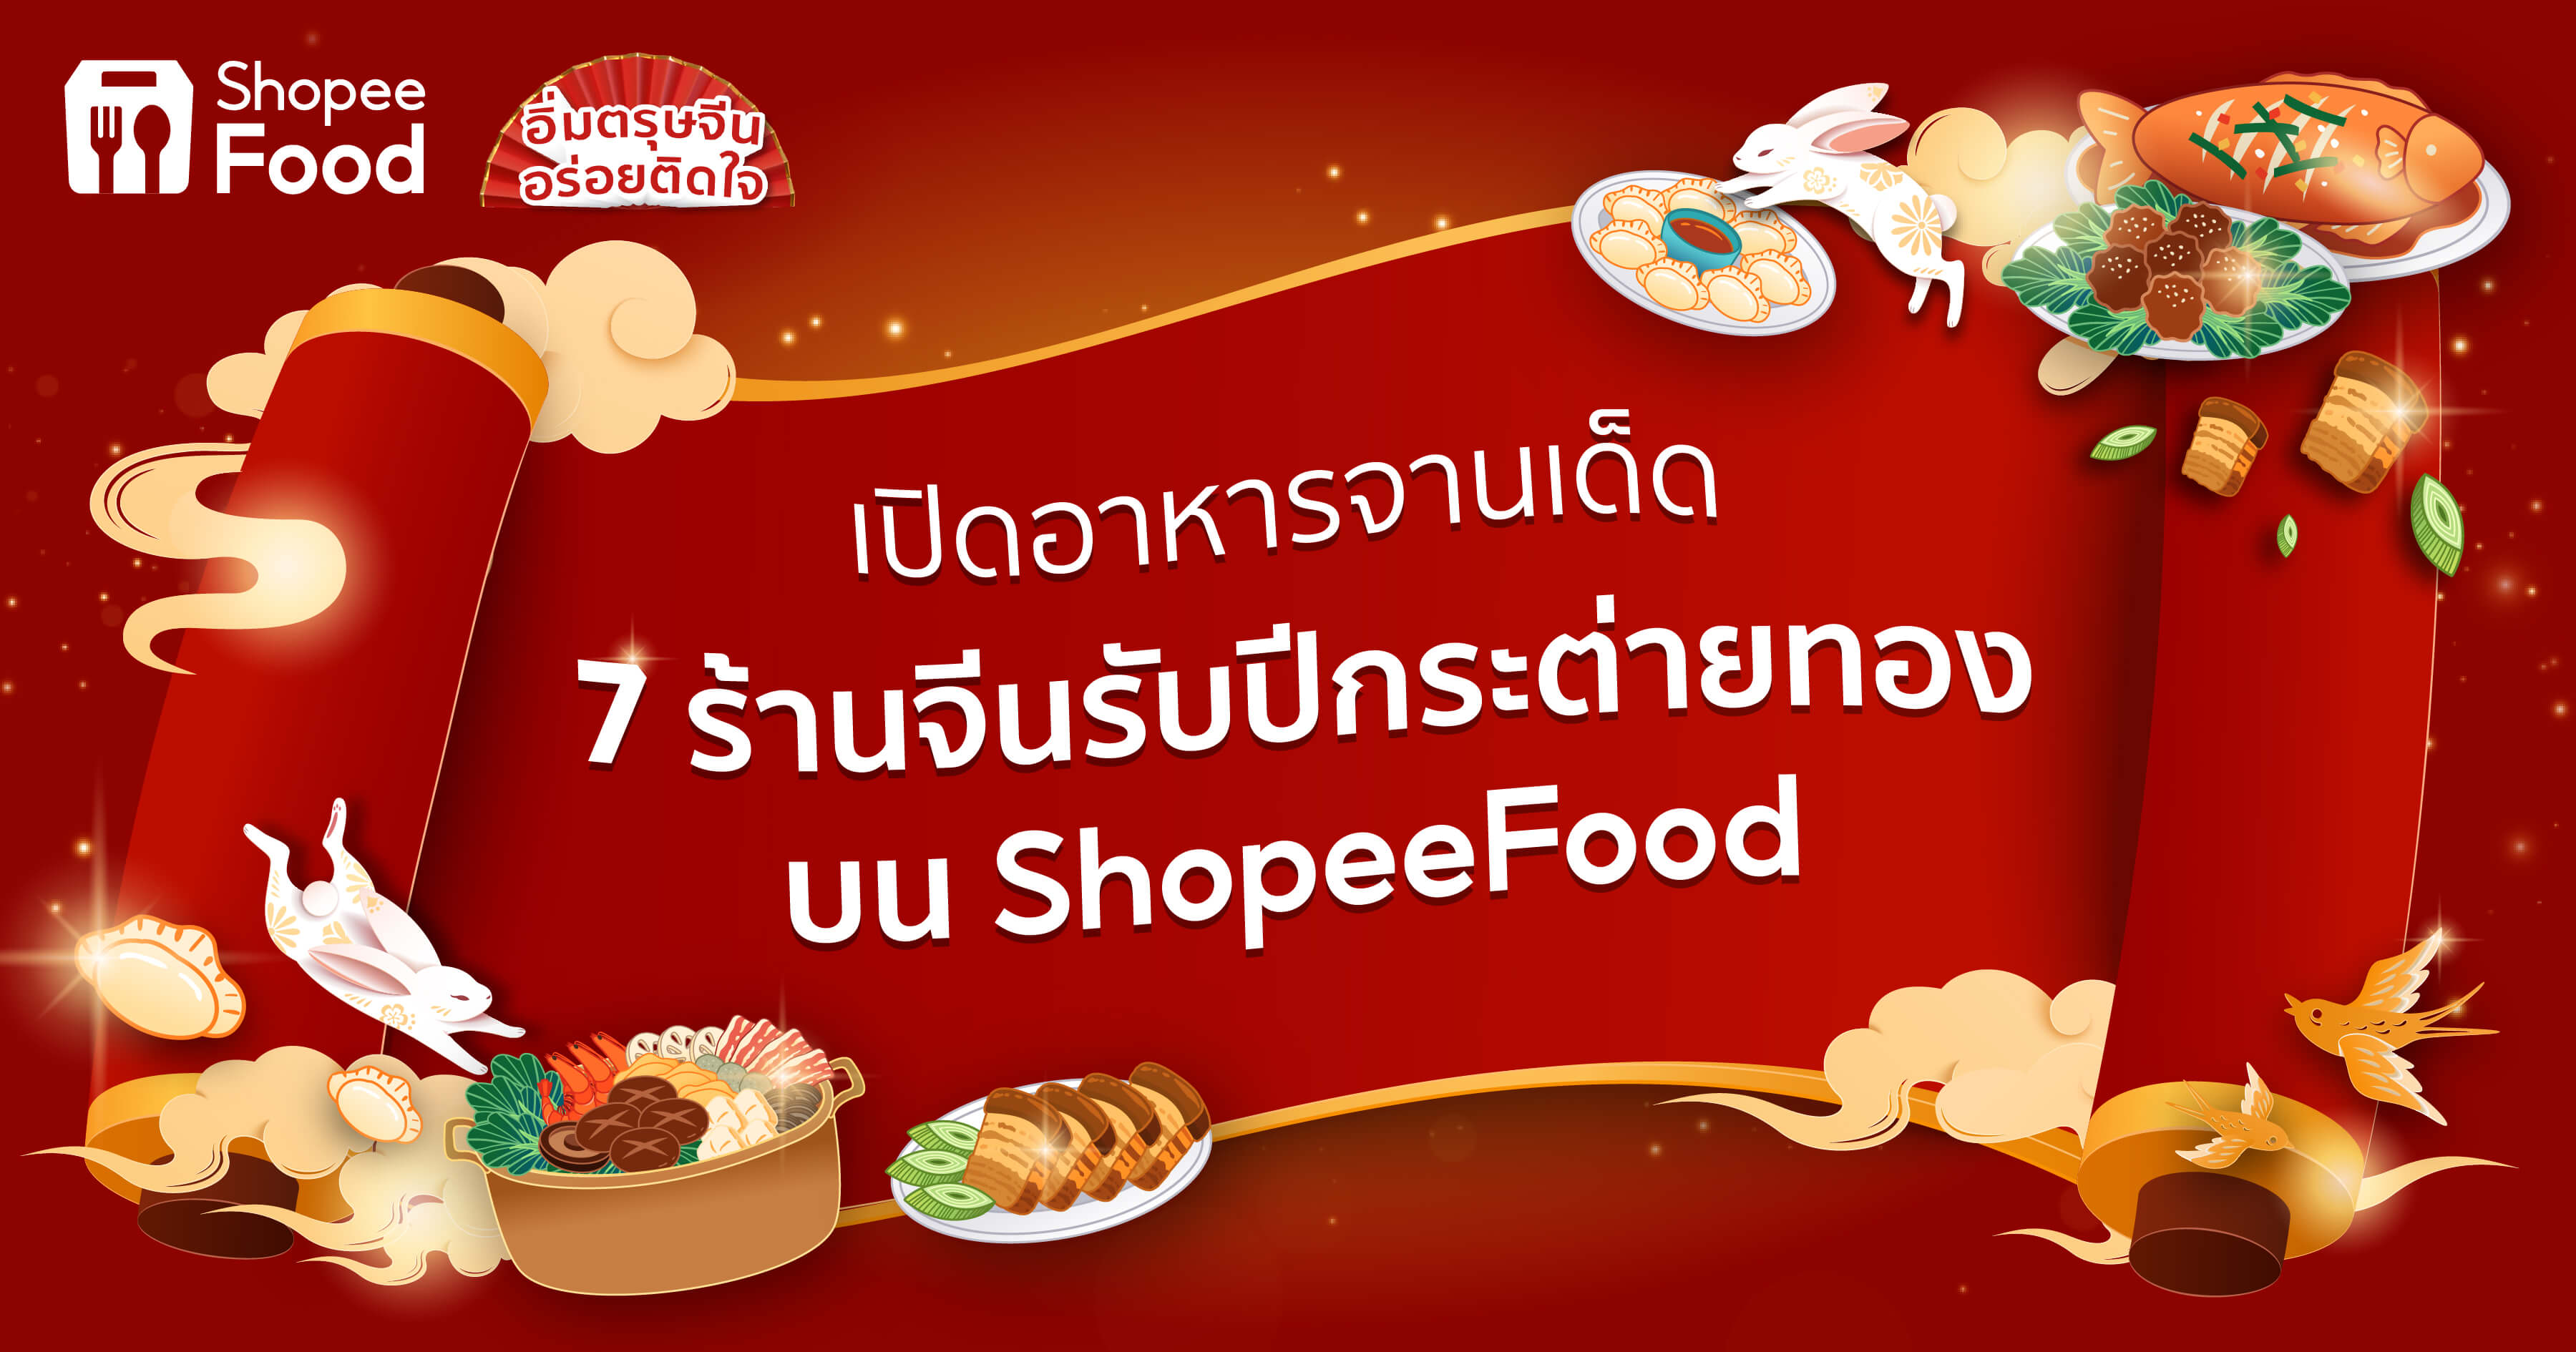 ShopeeFood เปิดอาหารจานเด็ด 7 ร้านจีนรับปีกระต่ายทอง เพิ่มสีสัน ในช่วงเทศกาลแห่งความสุข